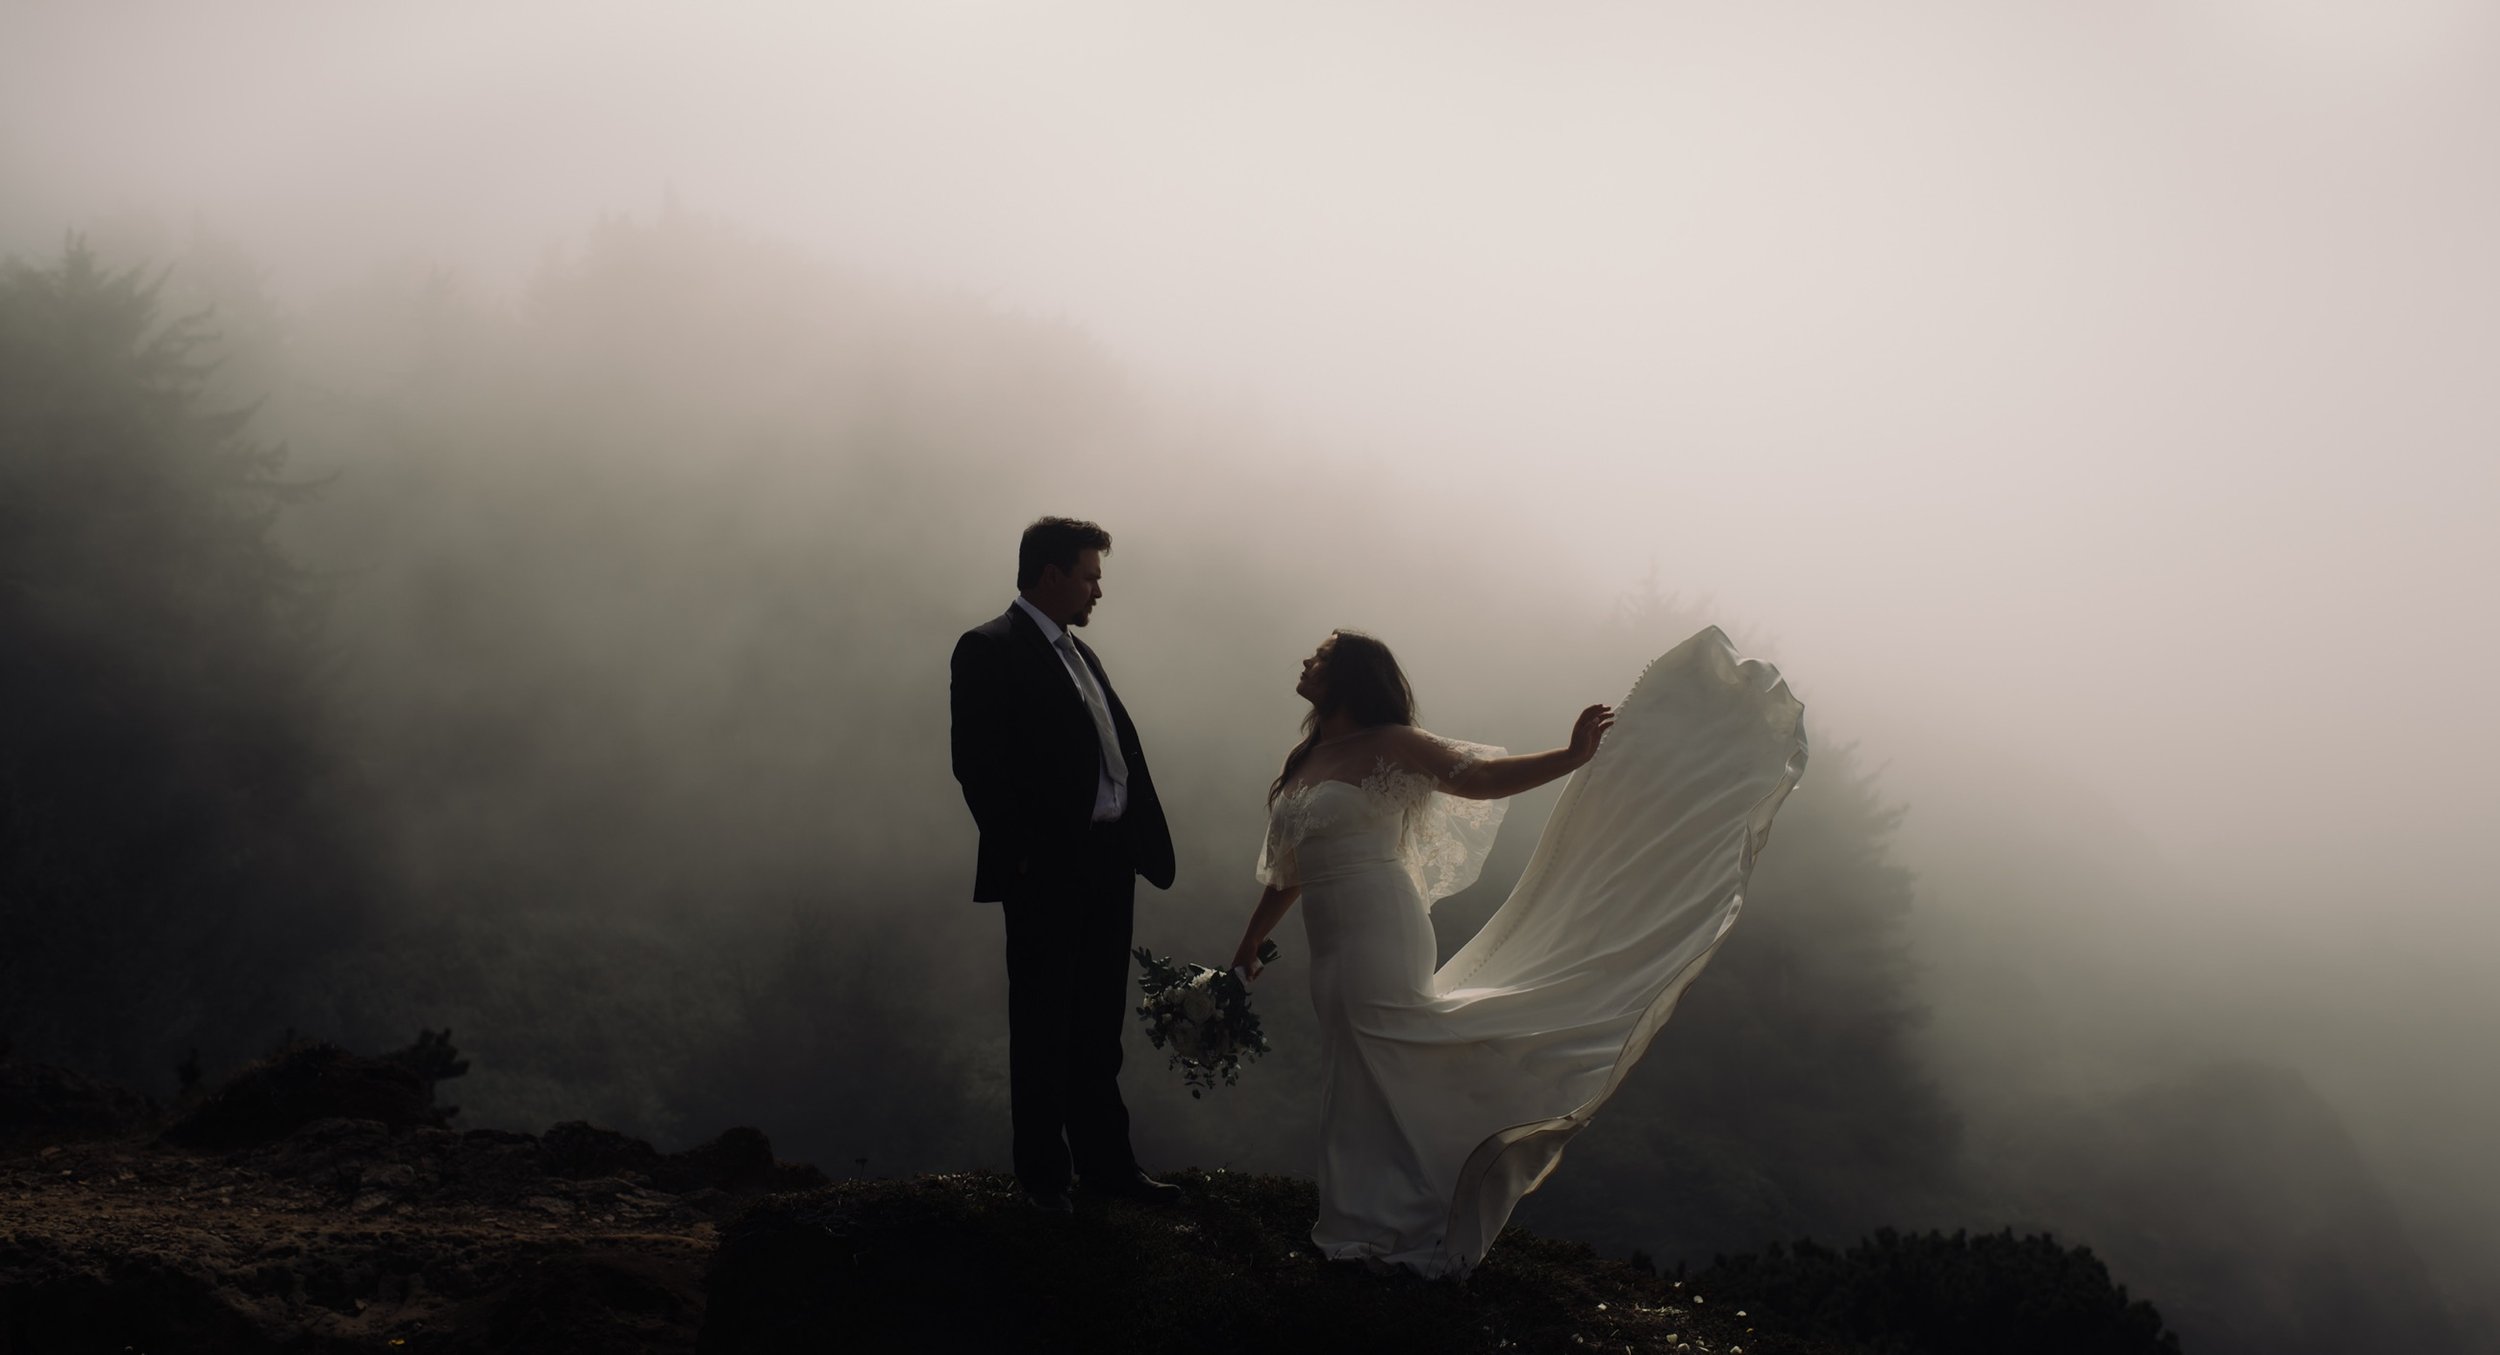 Moody-elopement-on-the-foggy-Oregon-Coast-Cliffside-31.jpg